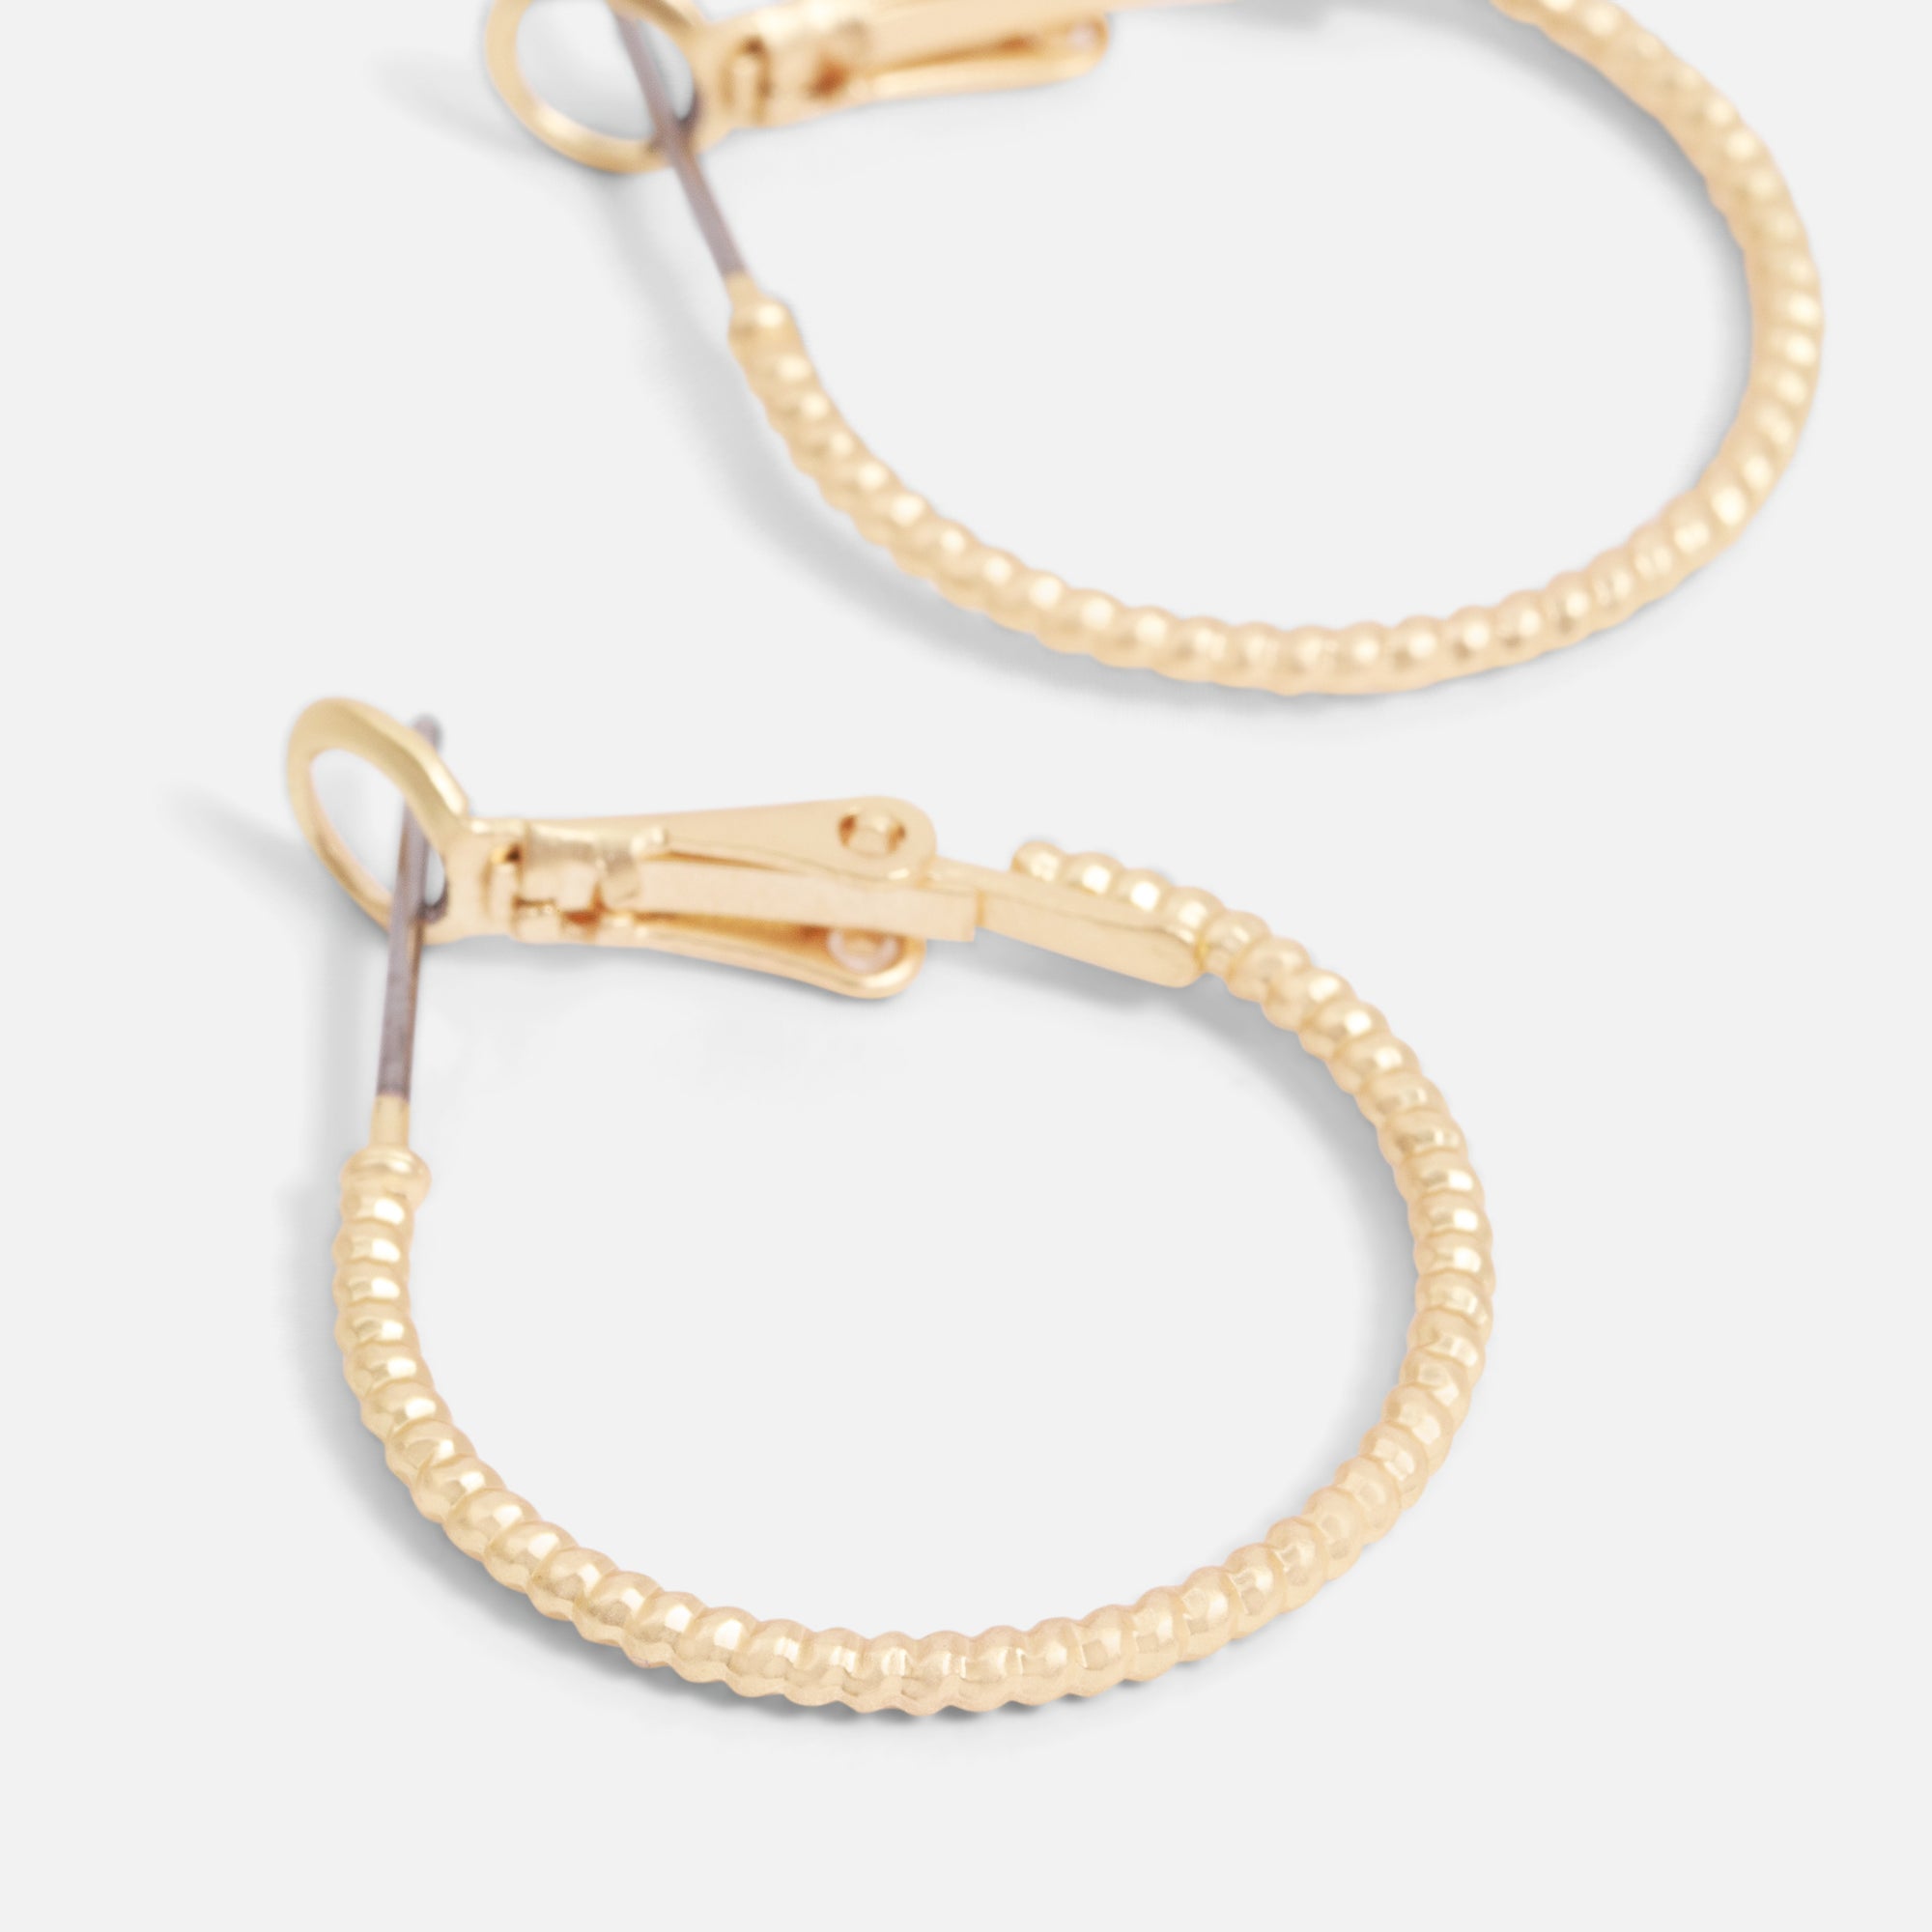 Duo of golden hoop earrings and mother-of-pearl pendant earrings